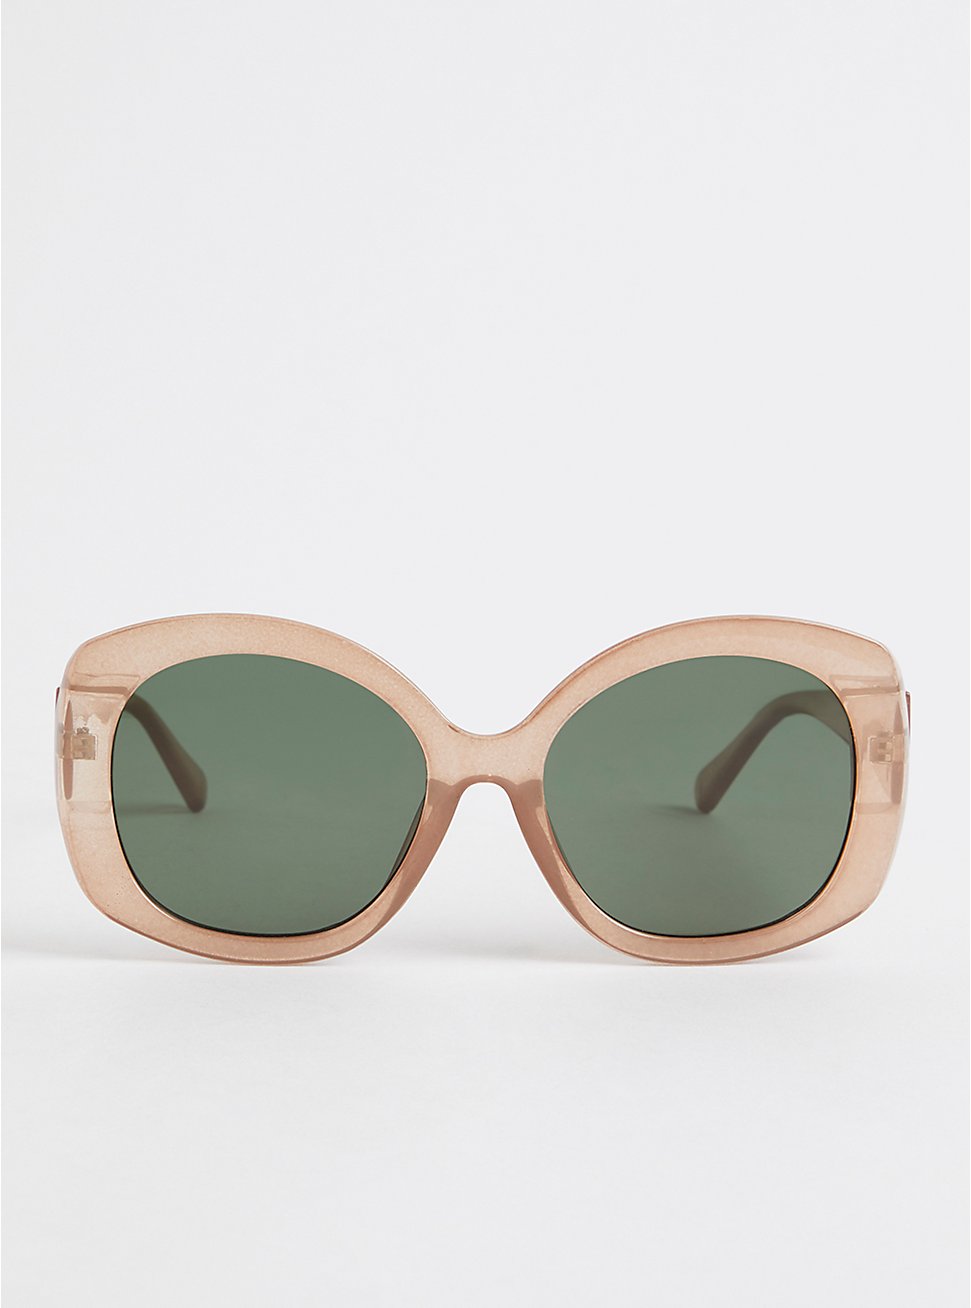 Oversize Square Sunglasses - Blush with Smoke Lens, , hi-res